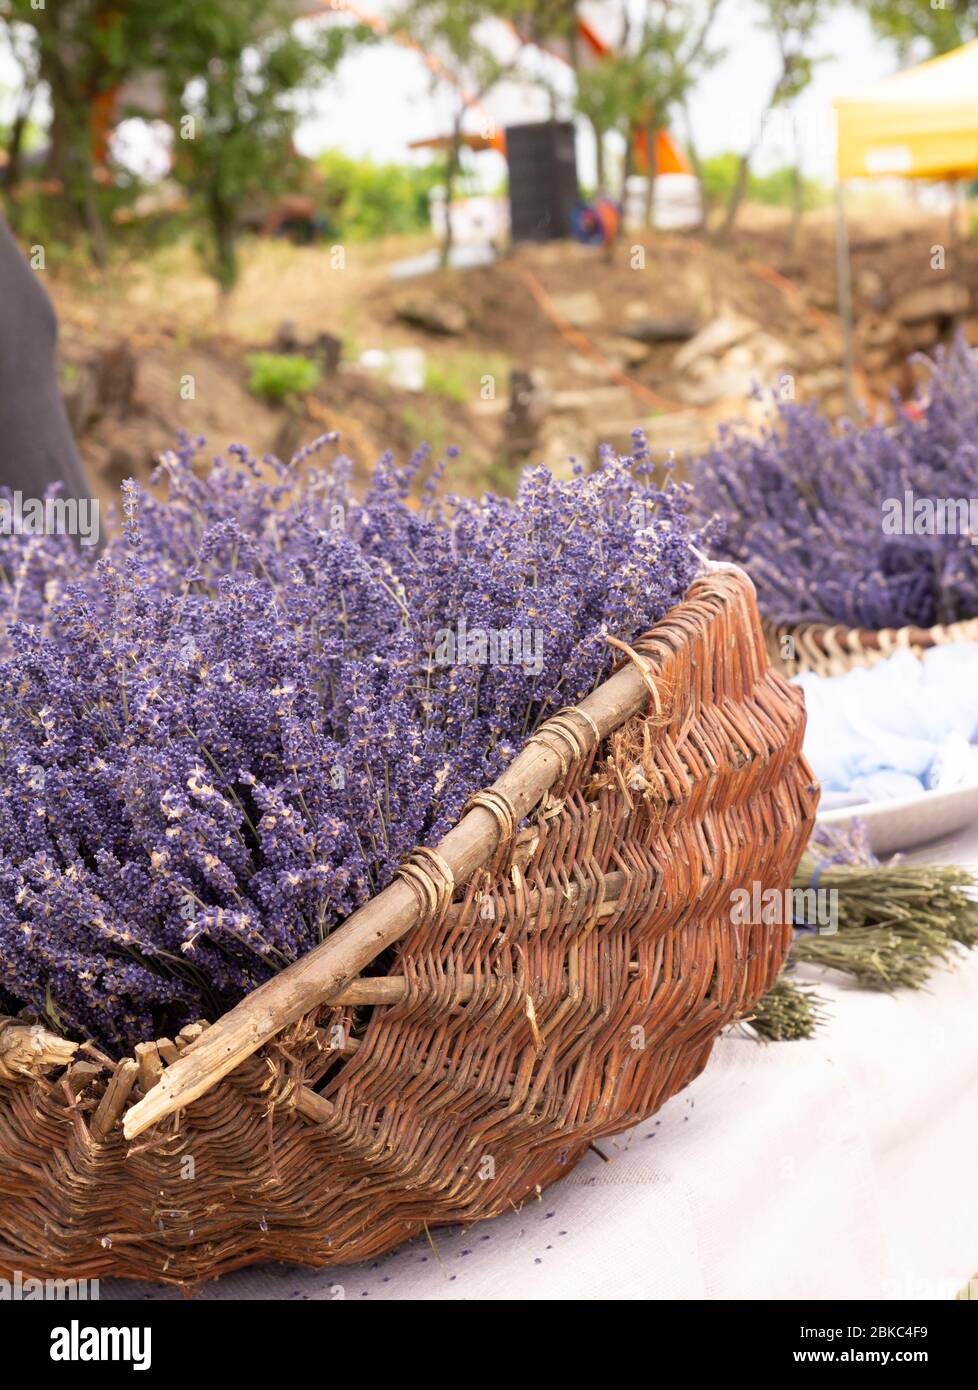 Lavender flowers in the wicker basket Stock Photo